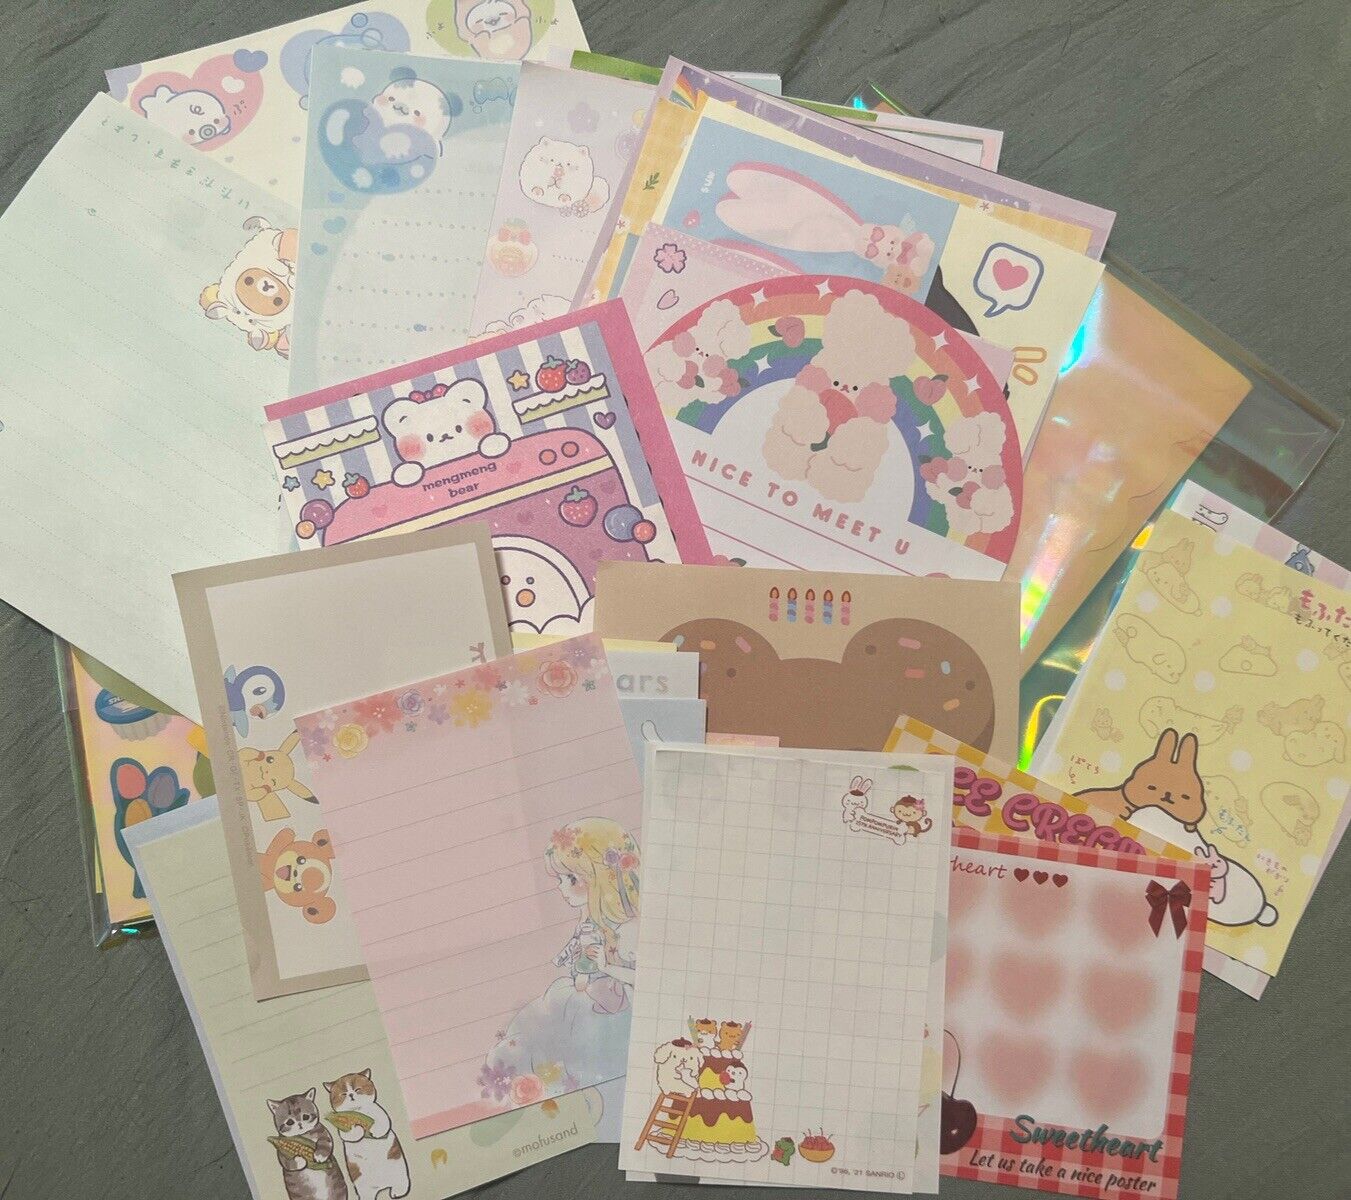 50 Piece Kawaii / Cute Memo Grab Bag Blind Bag - Includes 50 Random Memo Sheets